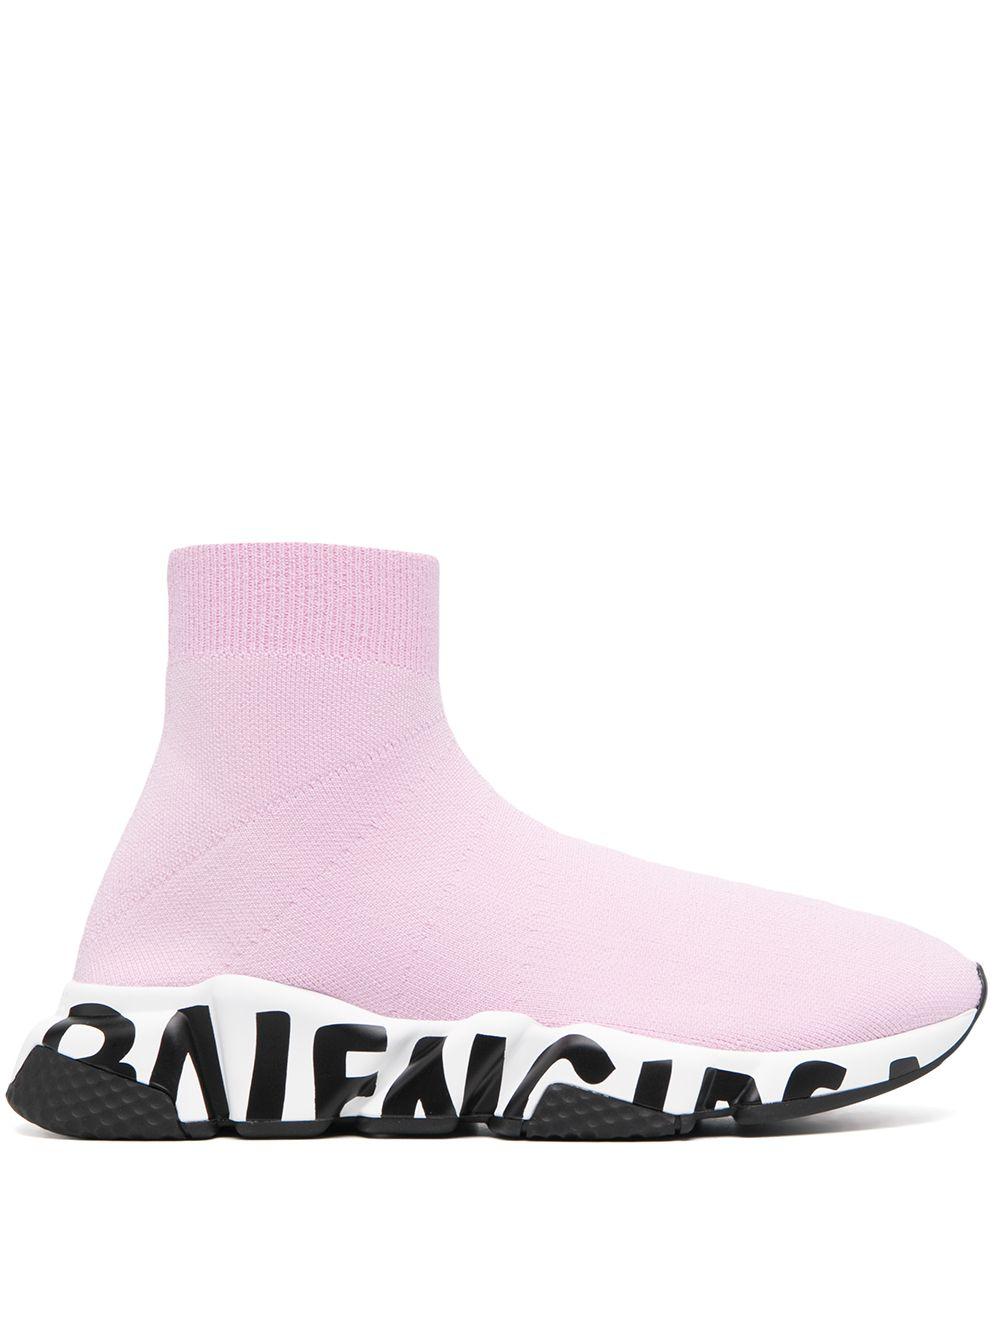 Balenciaga Speed Graffiti Sock Sneakers in Pink | Lyst